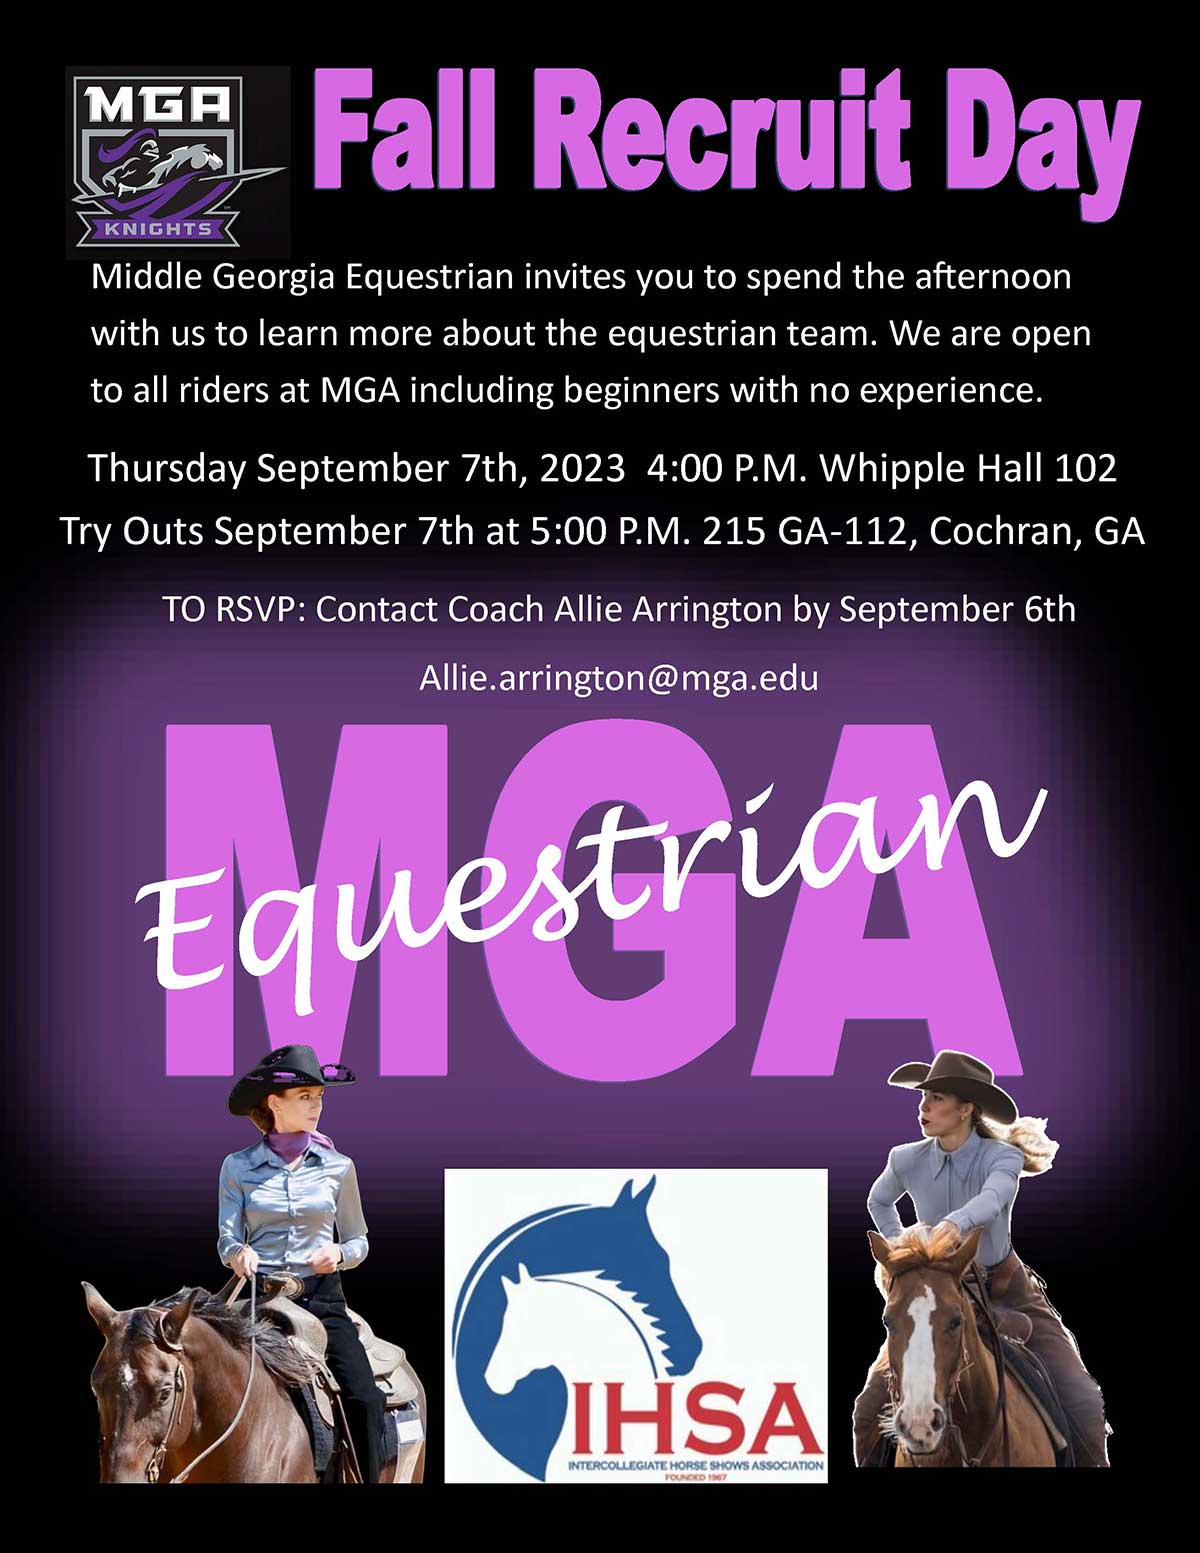 Equestrian recruitment flyer.